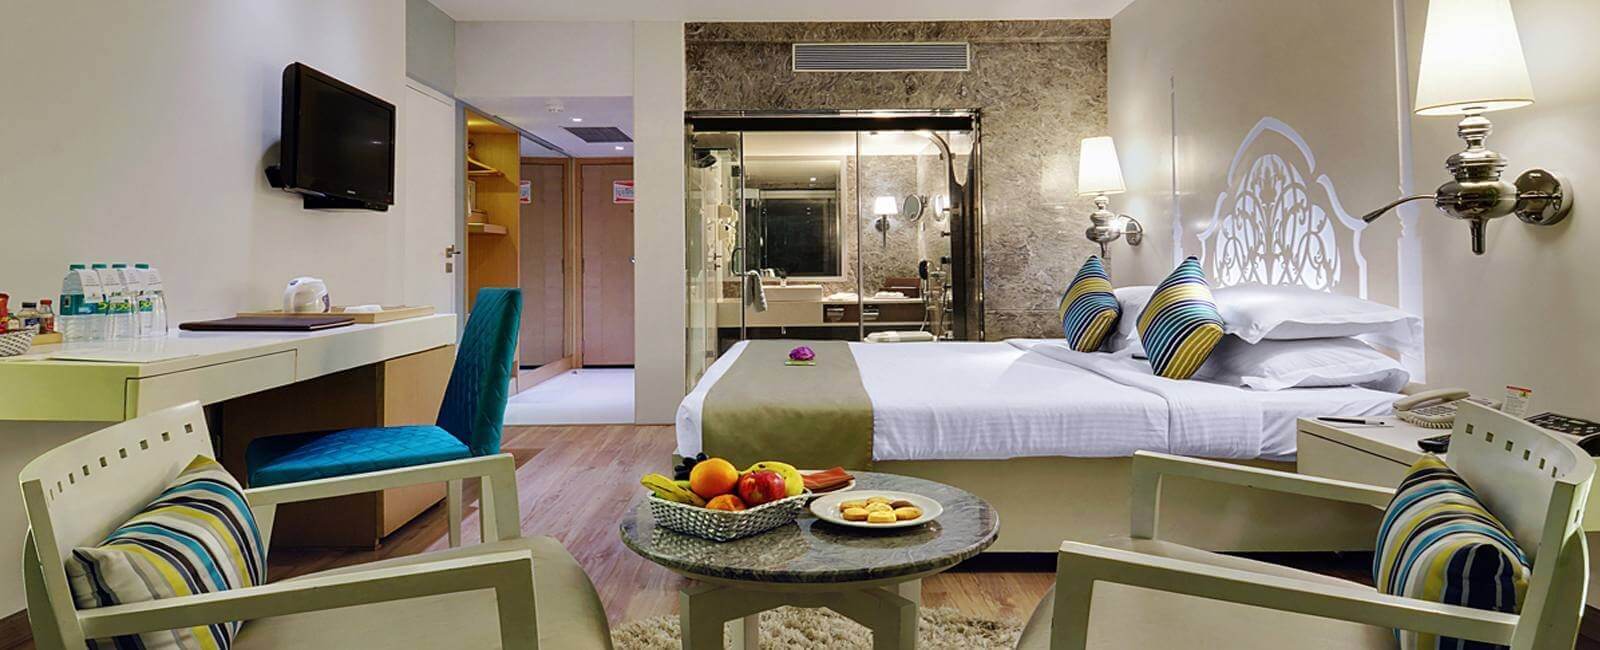 best hotel deals in Juhu Mumbai, room offers in Juhu, weekend hotel deals in Juhu, Mumbai, package deals hotel in Juhu, Mumbai